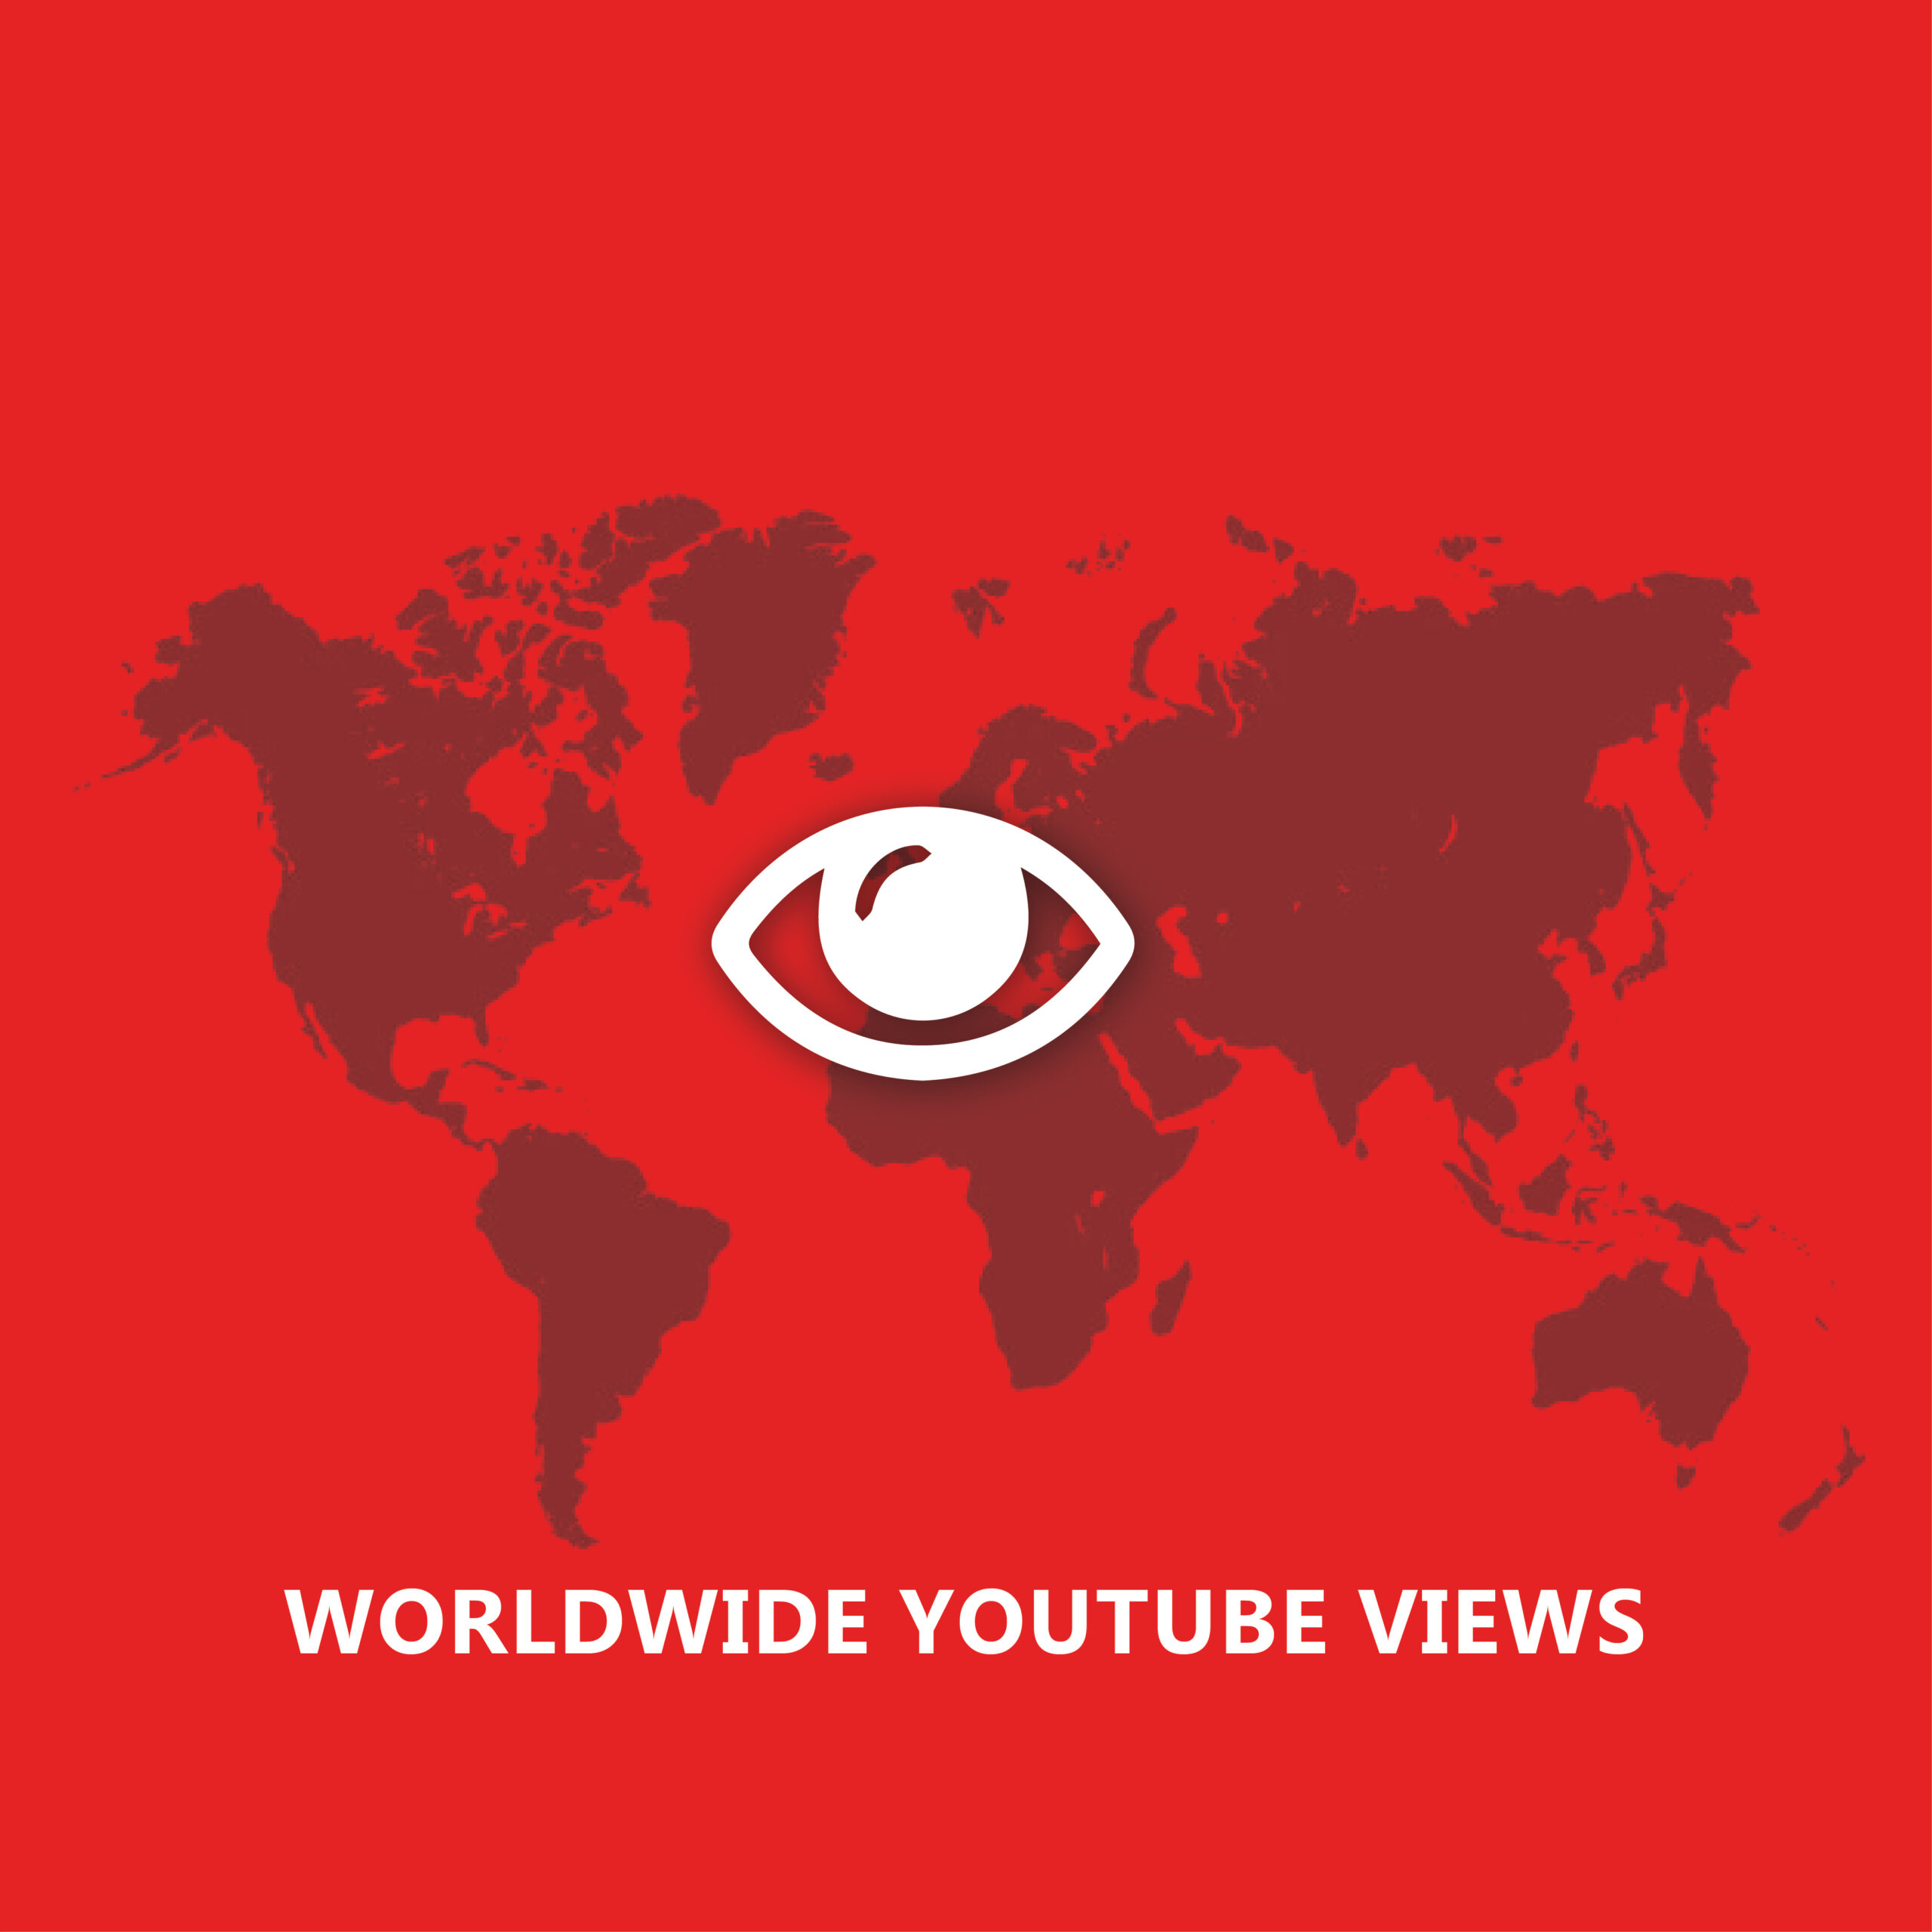 Worldwide YouTube Views